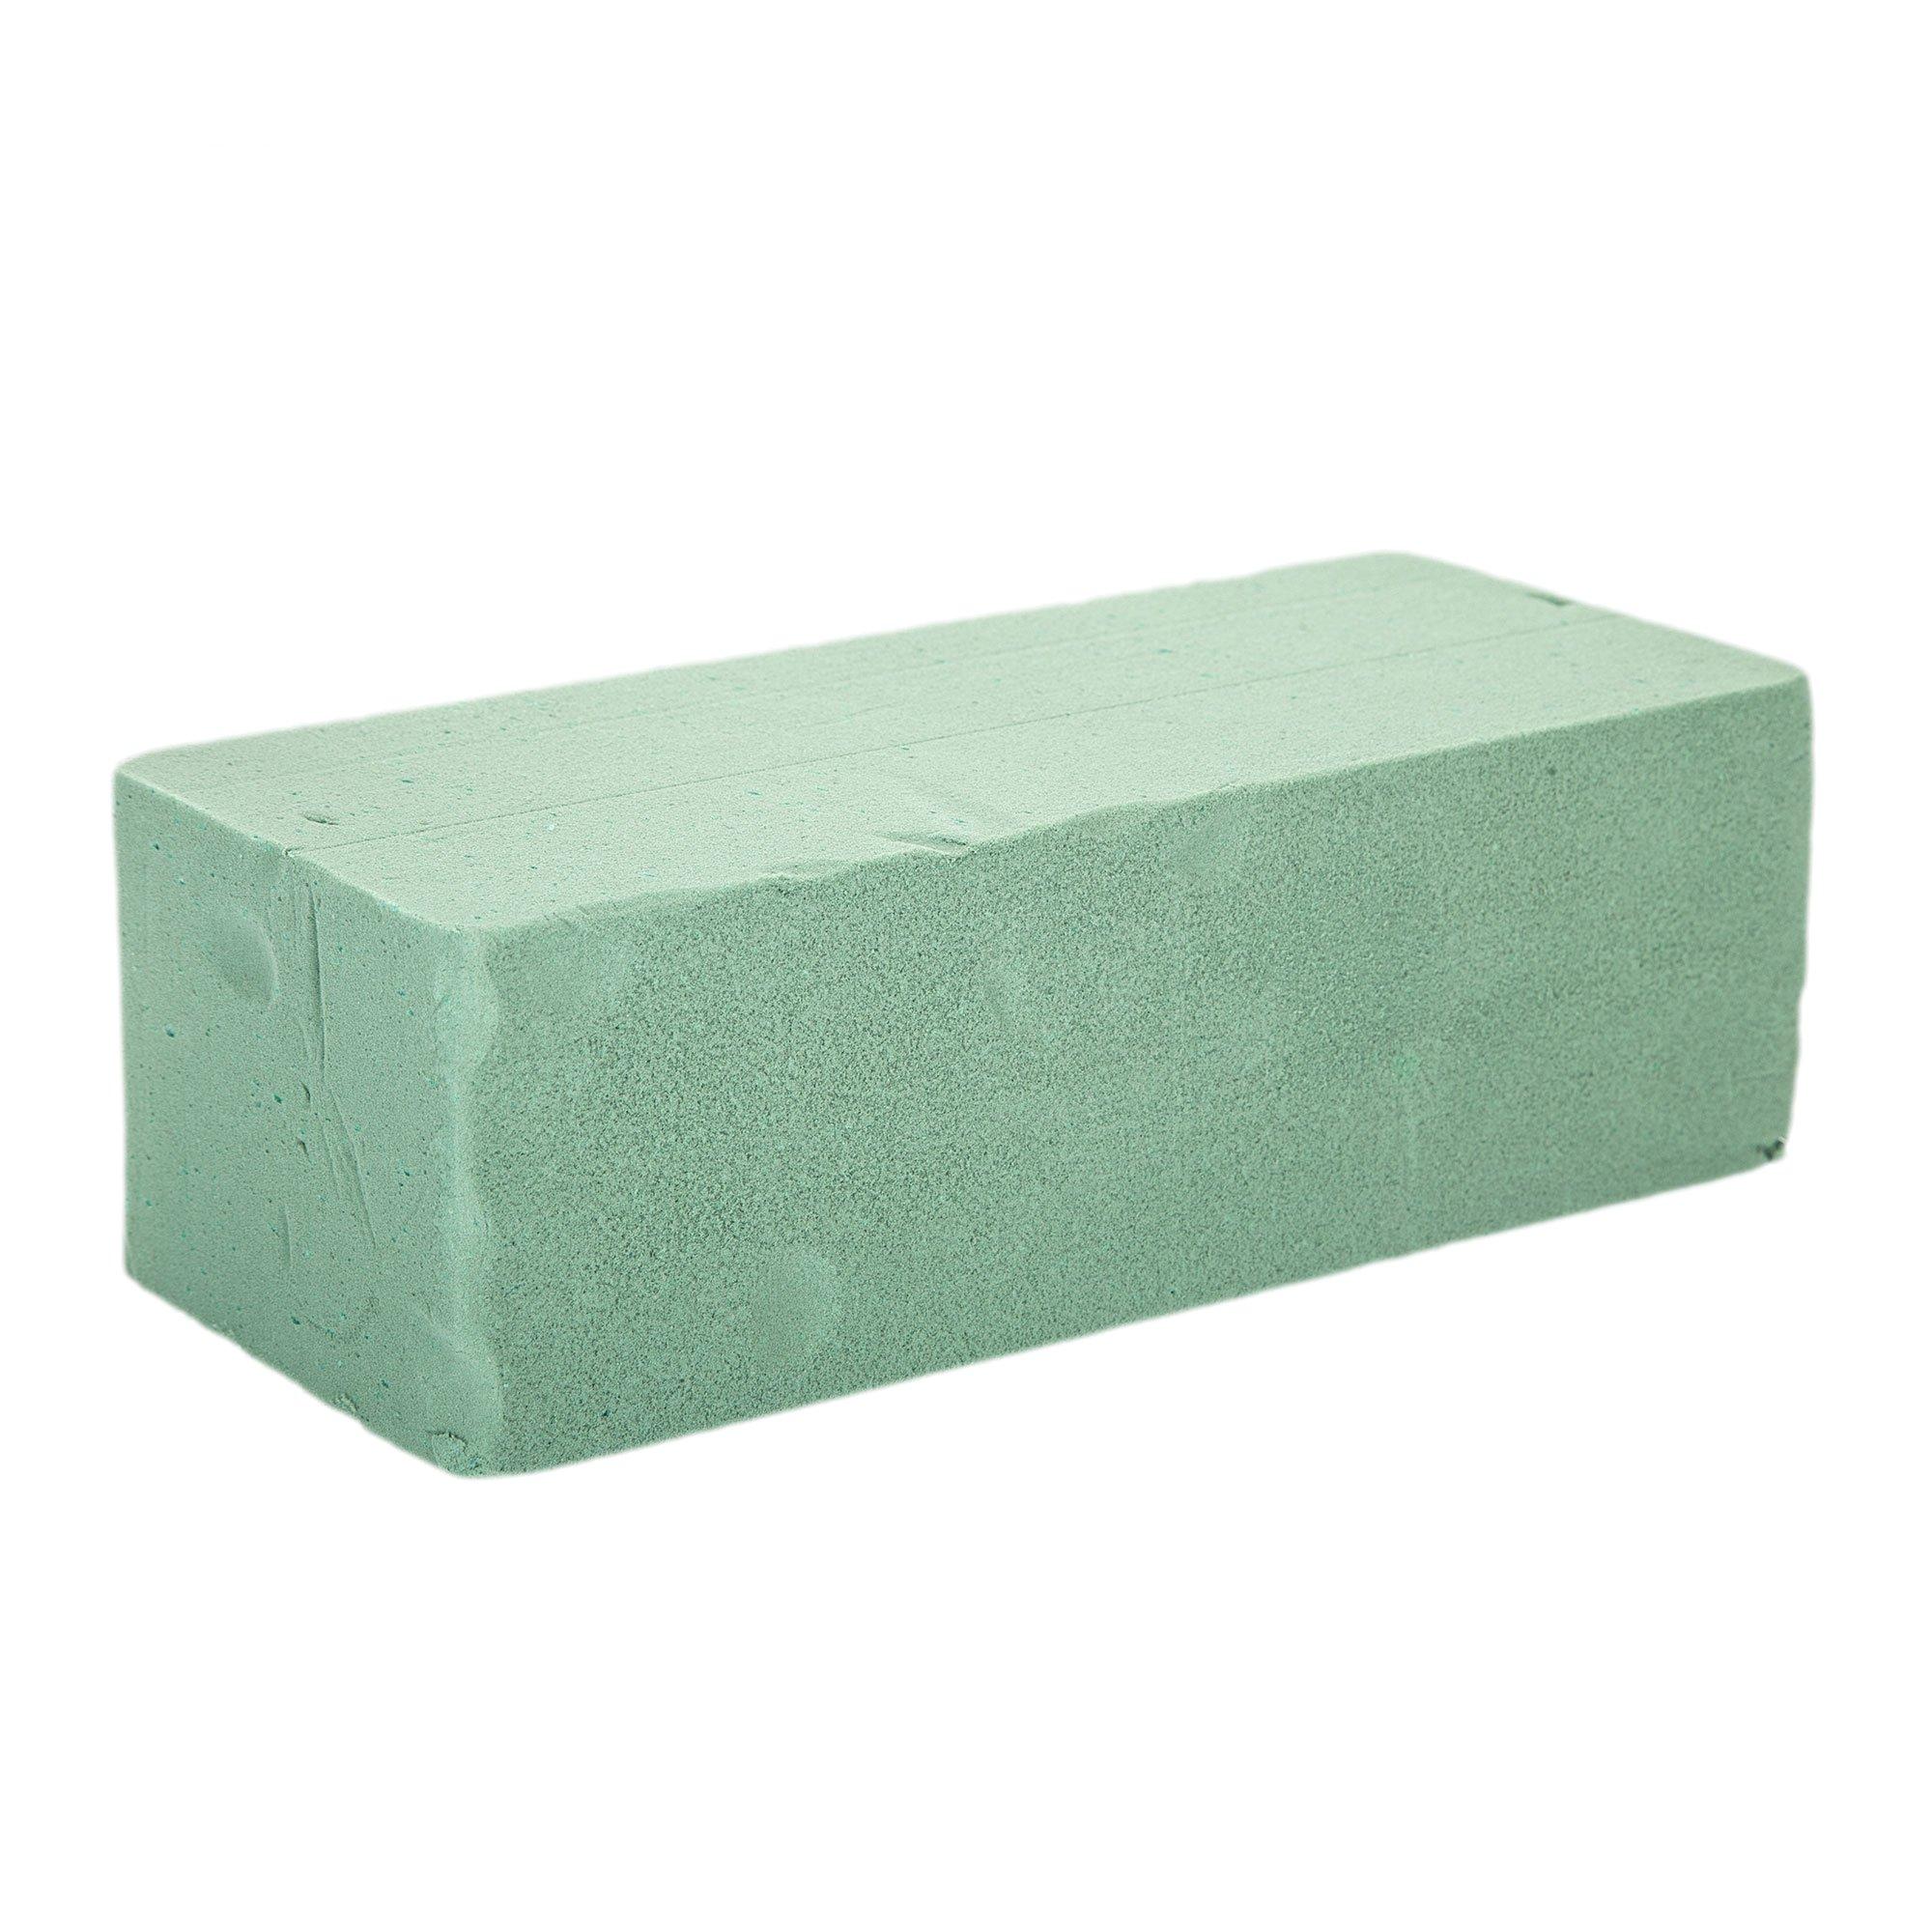 Oasis Wet Brick Floral Foam - Premium quality - Pack 1, 2, 4, 8